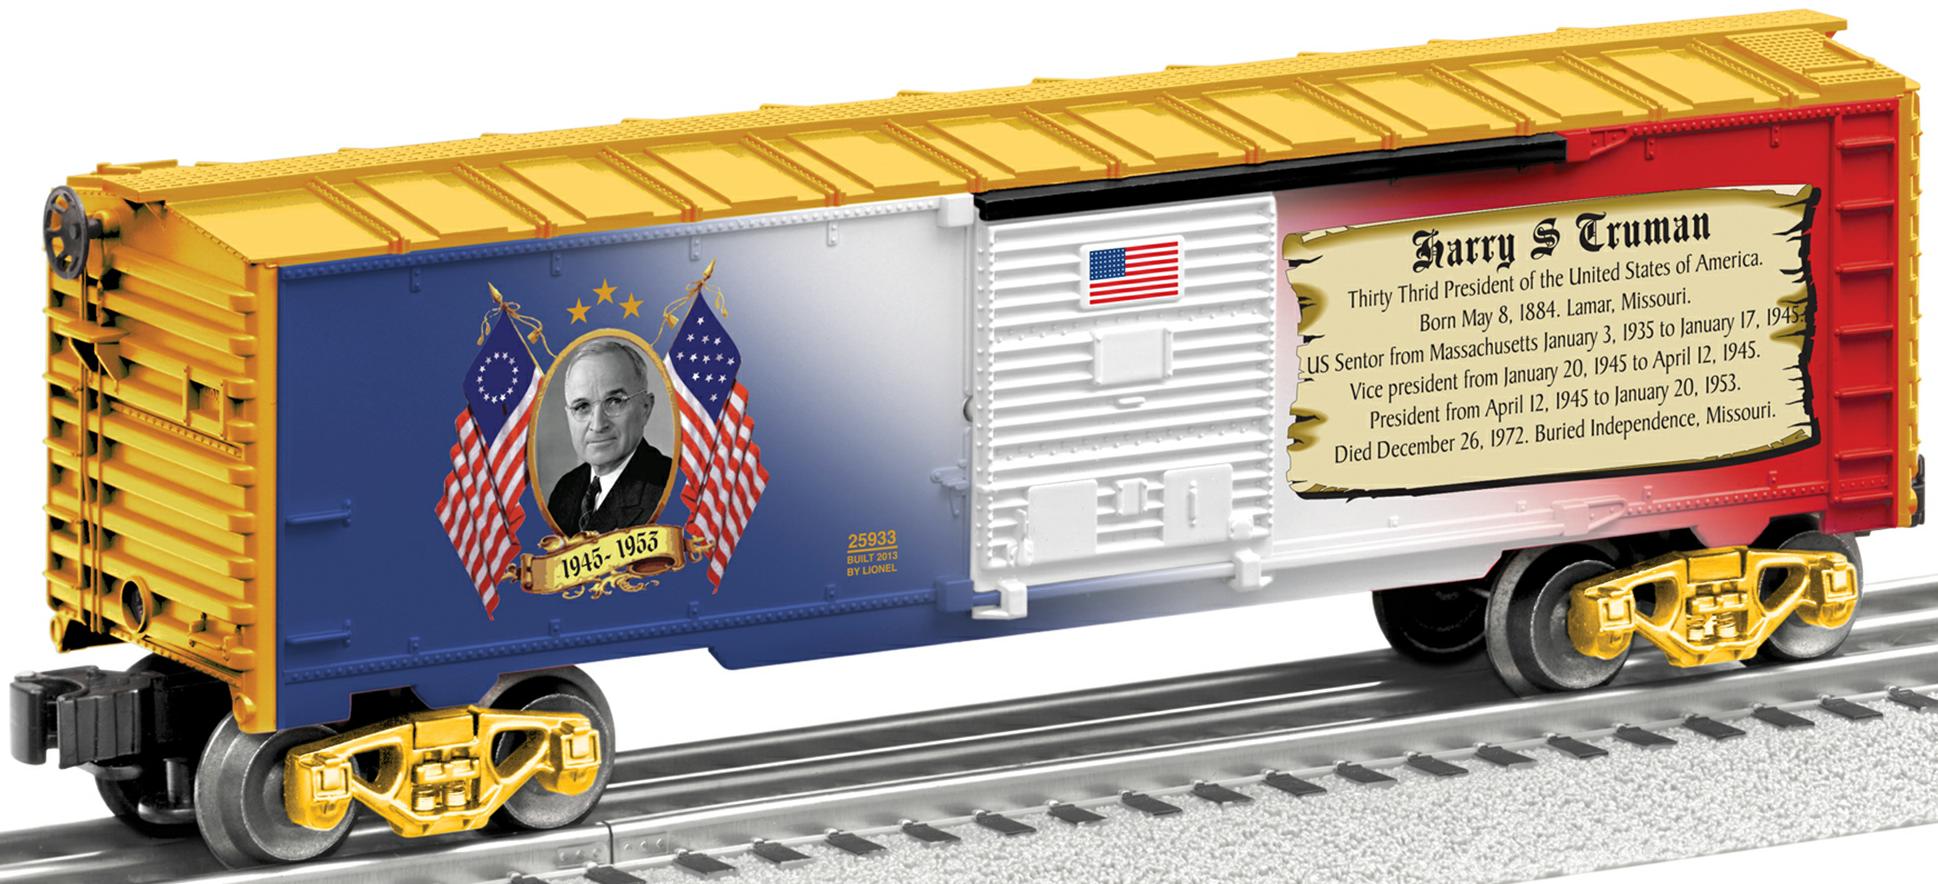 Harry S. Truman boxcar image